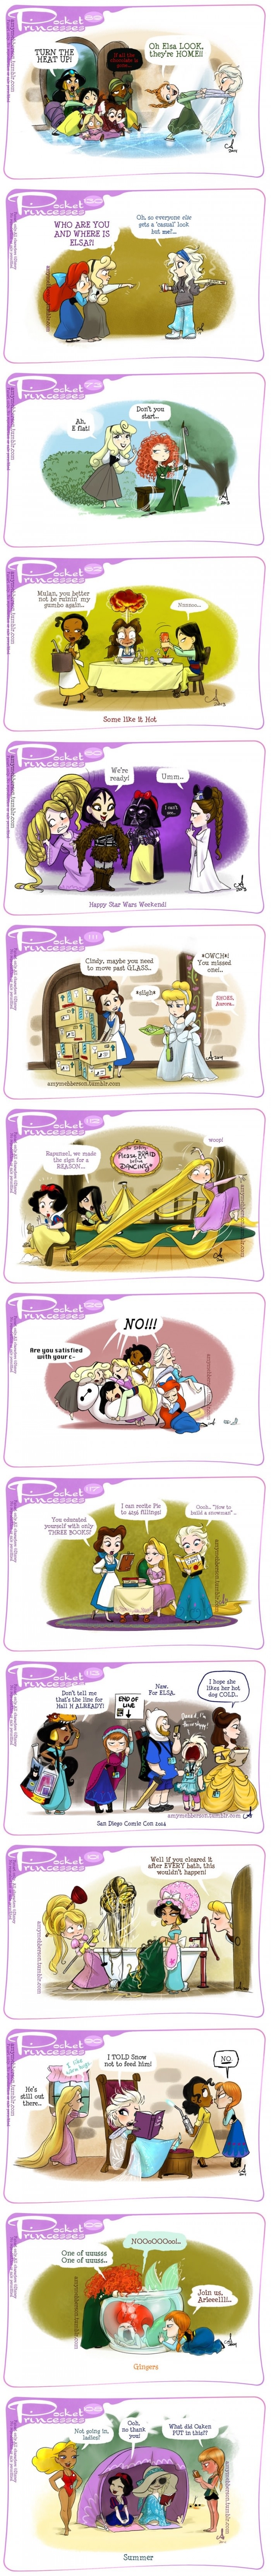 Disney's pocket princesses